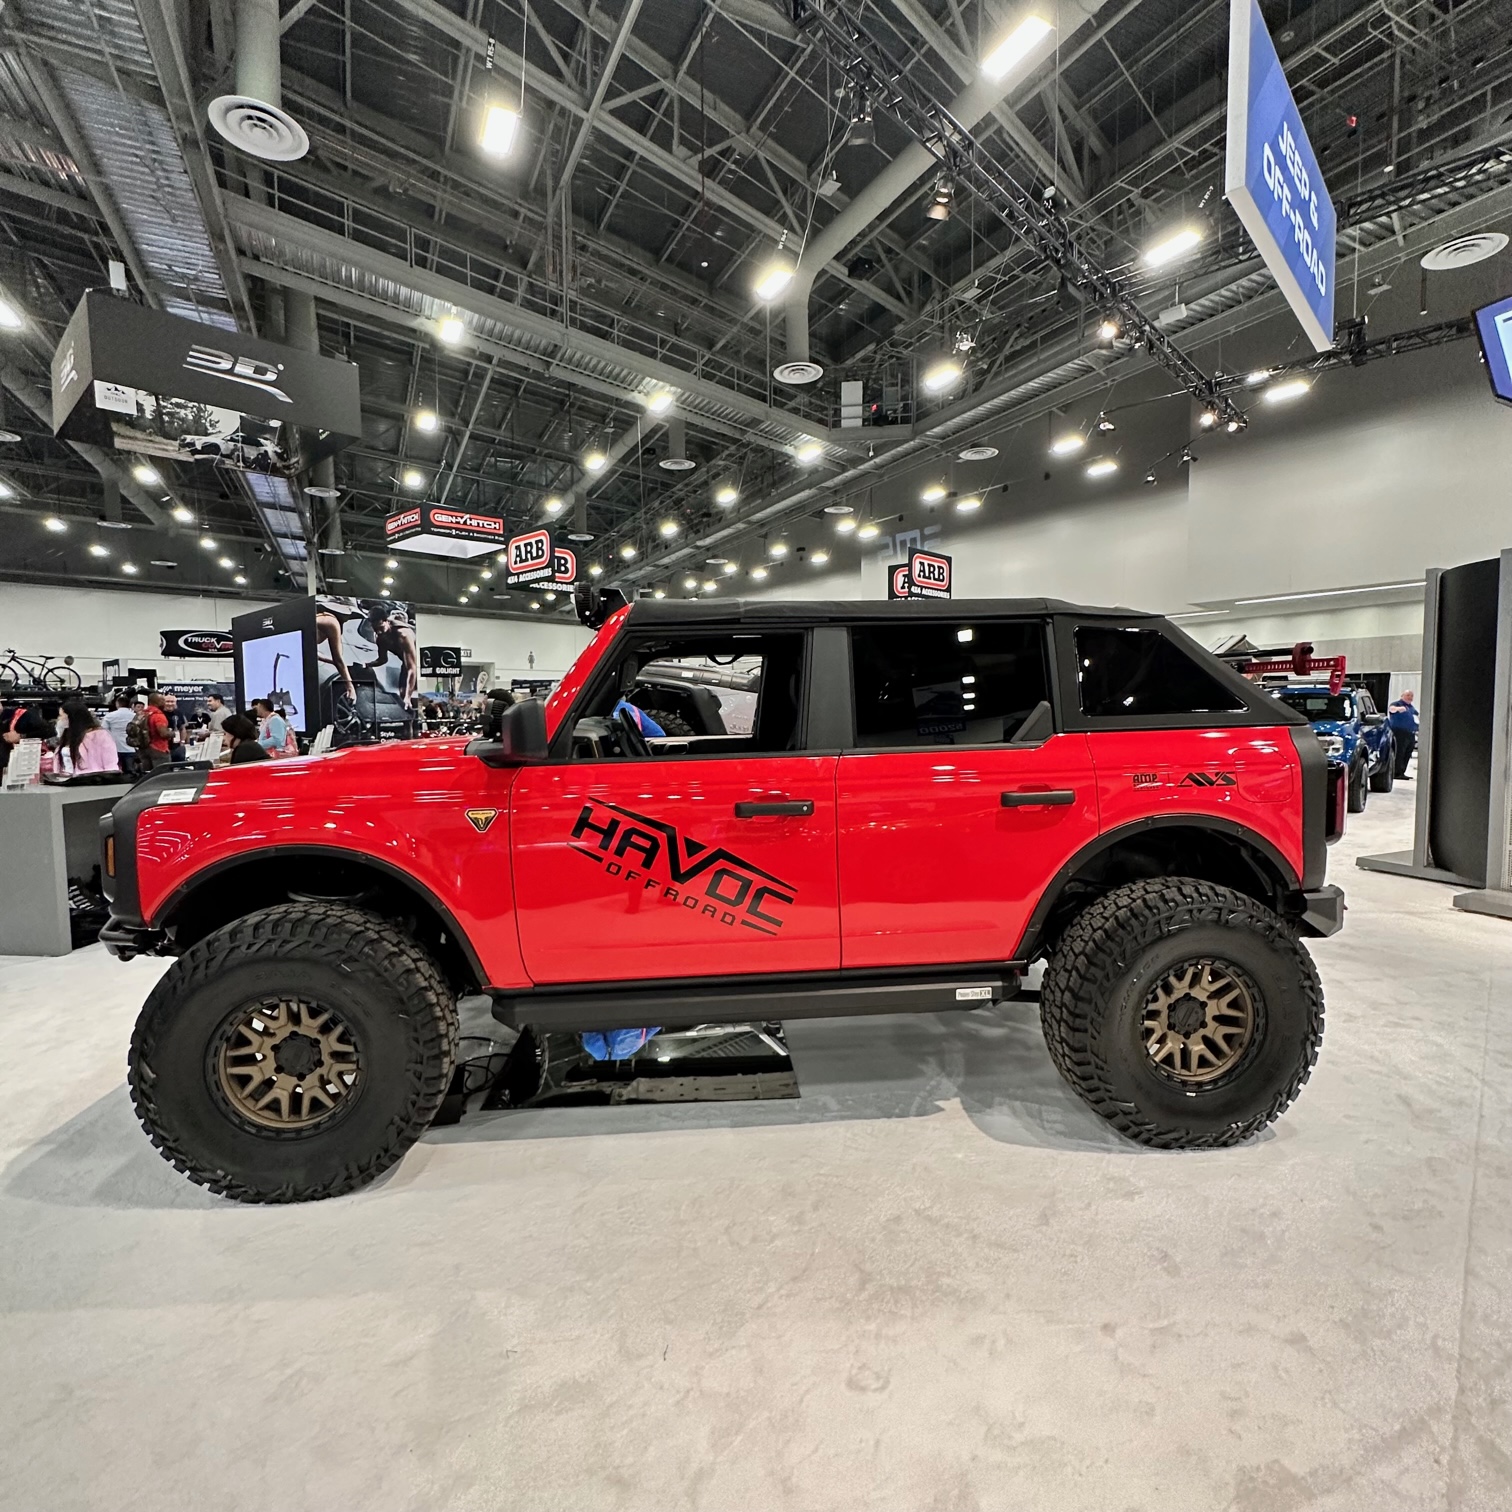 ARB 4x4 Accessories Bronco Build at SEMA 2021  Bronco6G - 2021+ Ford  Bronco & Bronco Raptor Forum, News, Blog & Owners Community